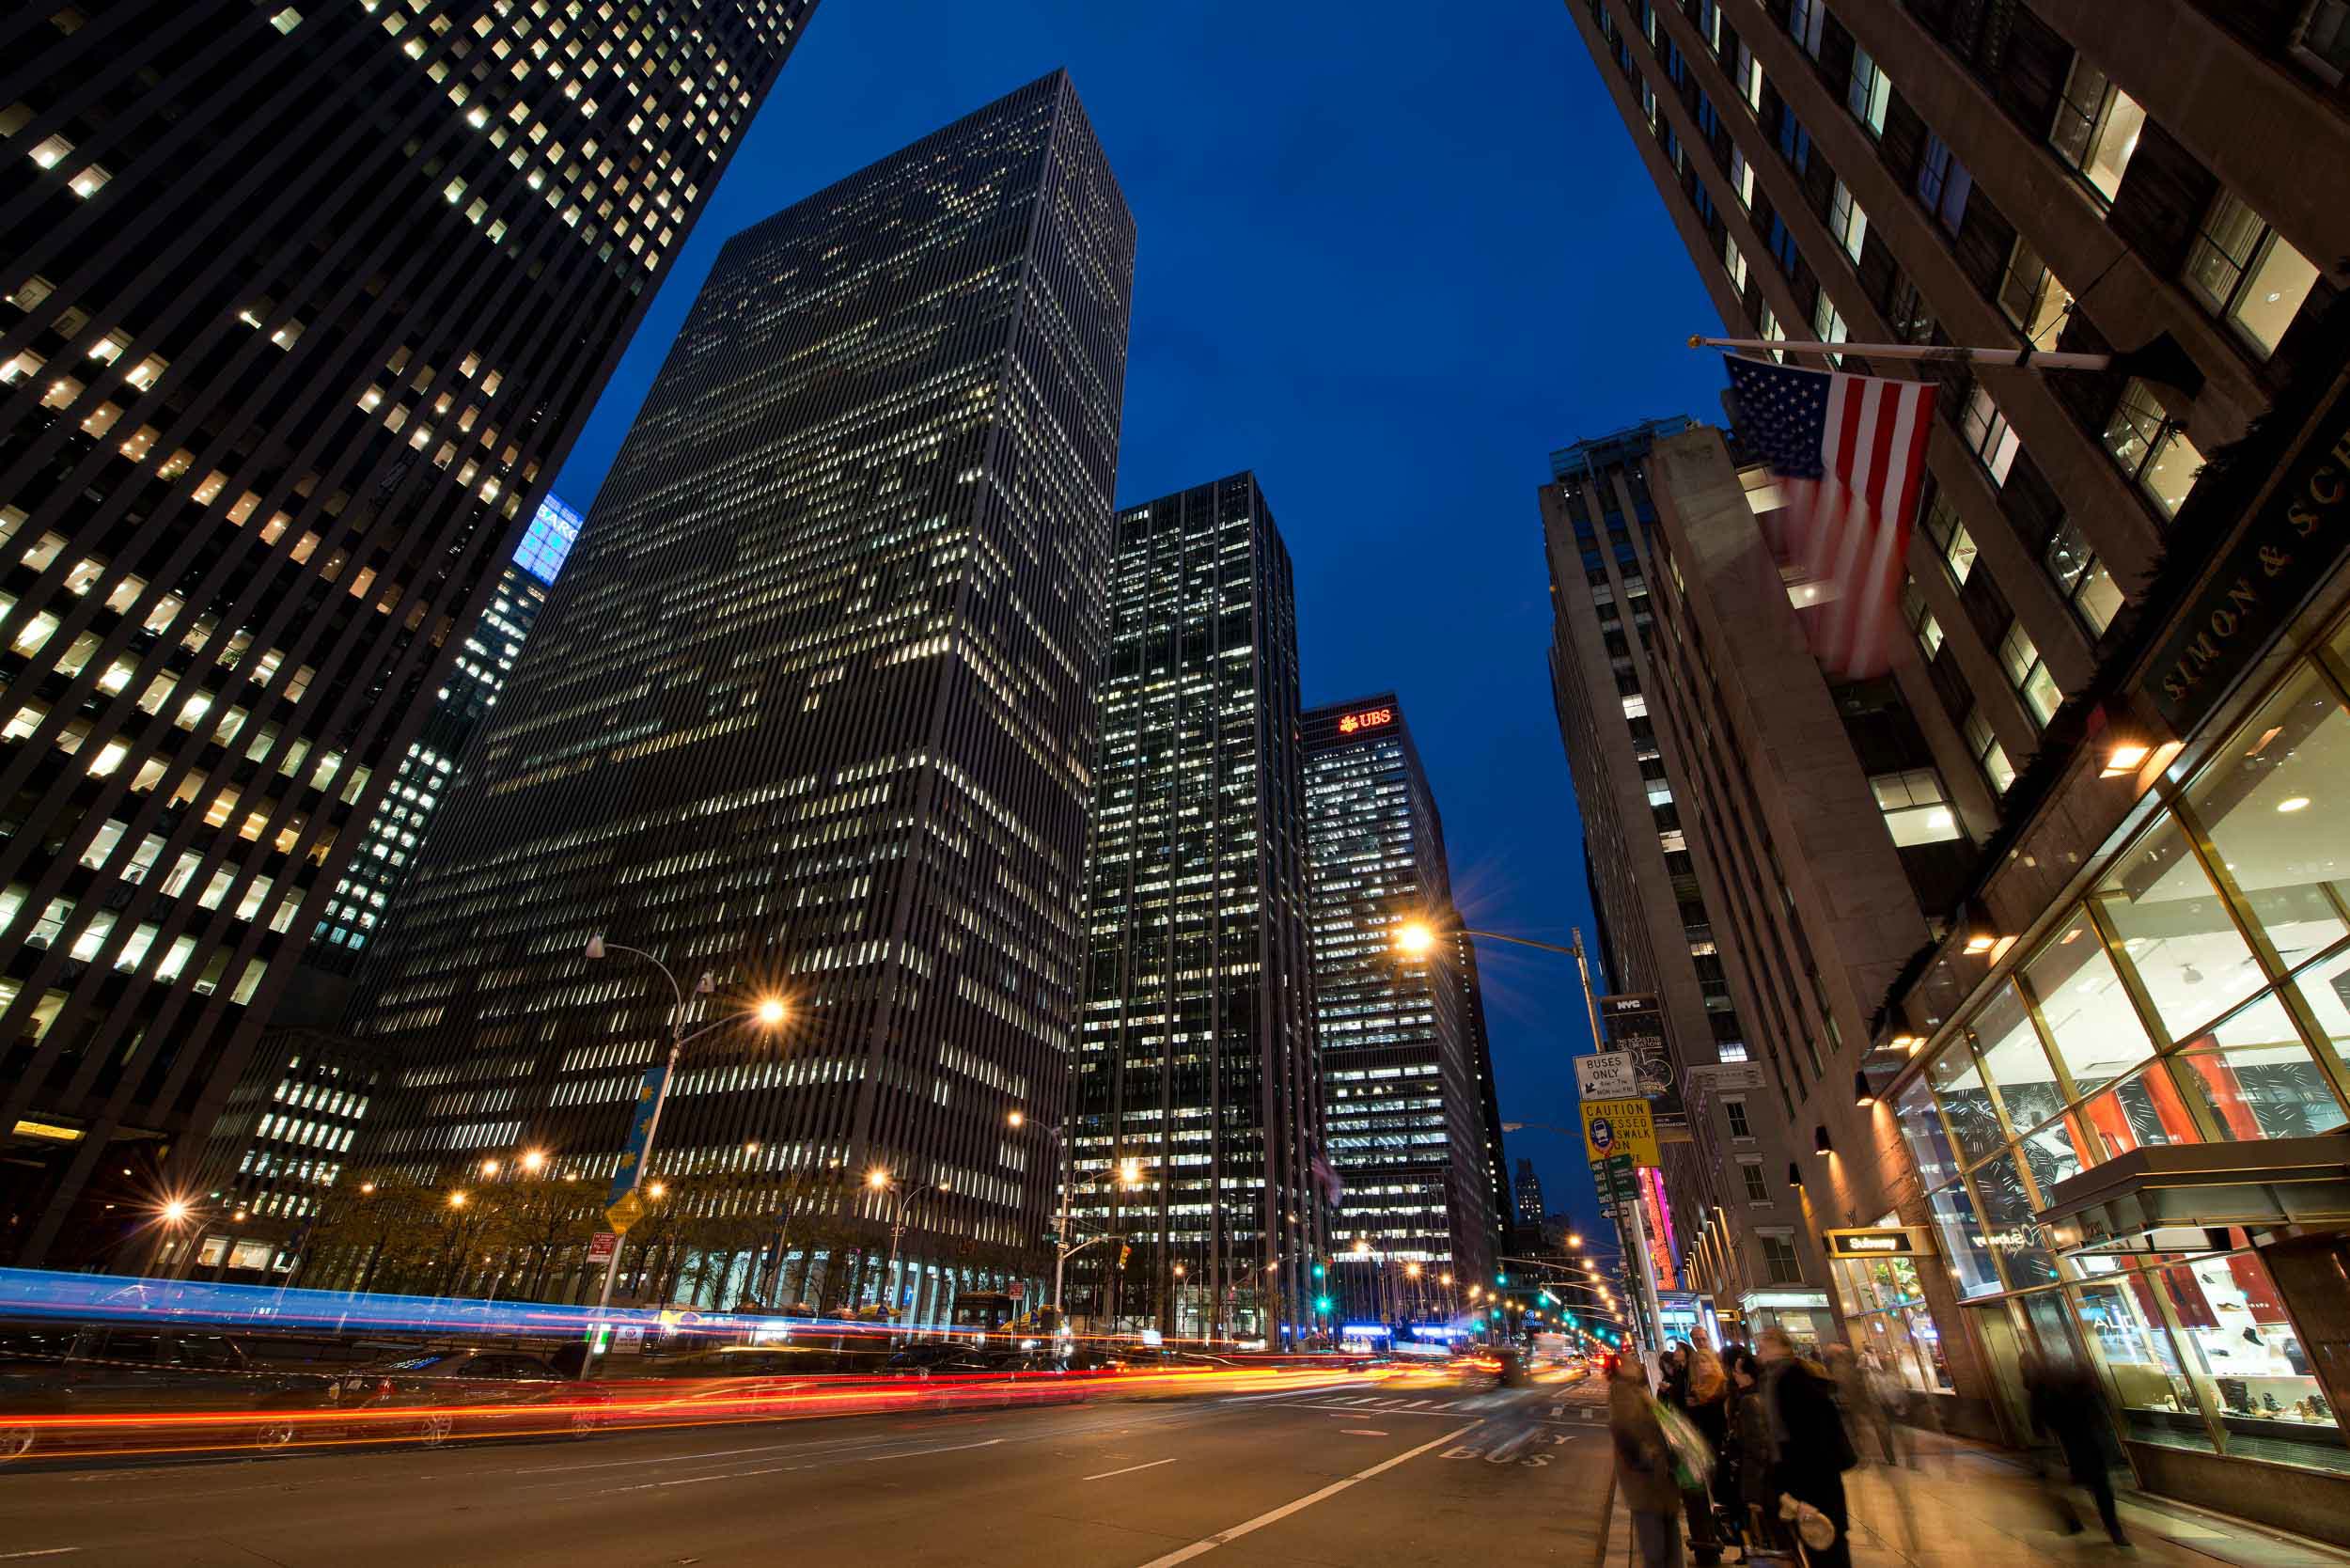 6th-avenue-night-architecture-high-rise-manhattan-midtown-new-york-city-usa-america